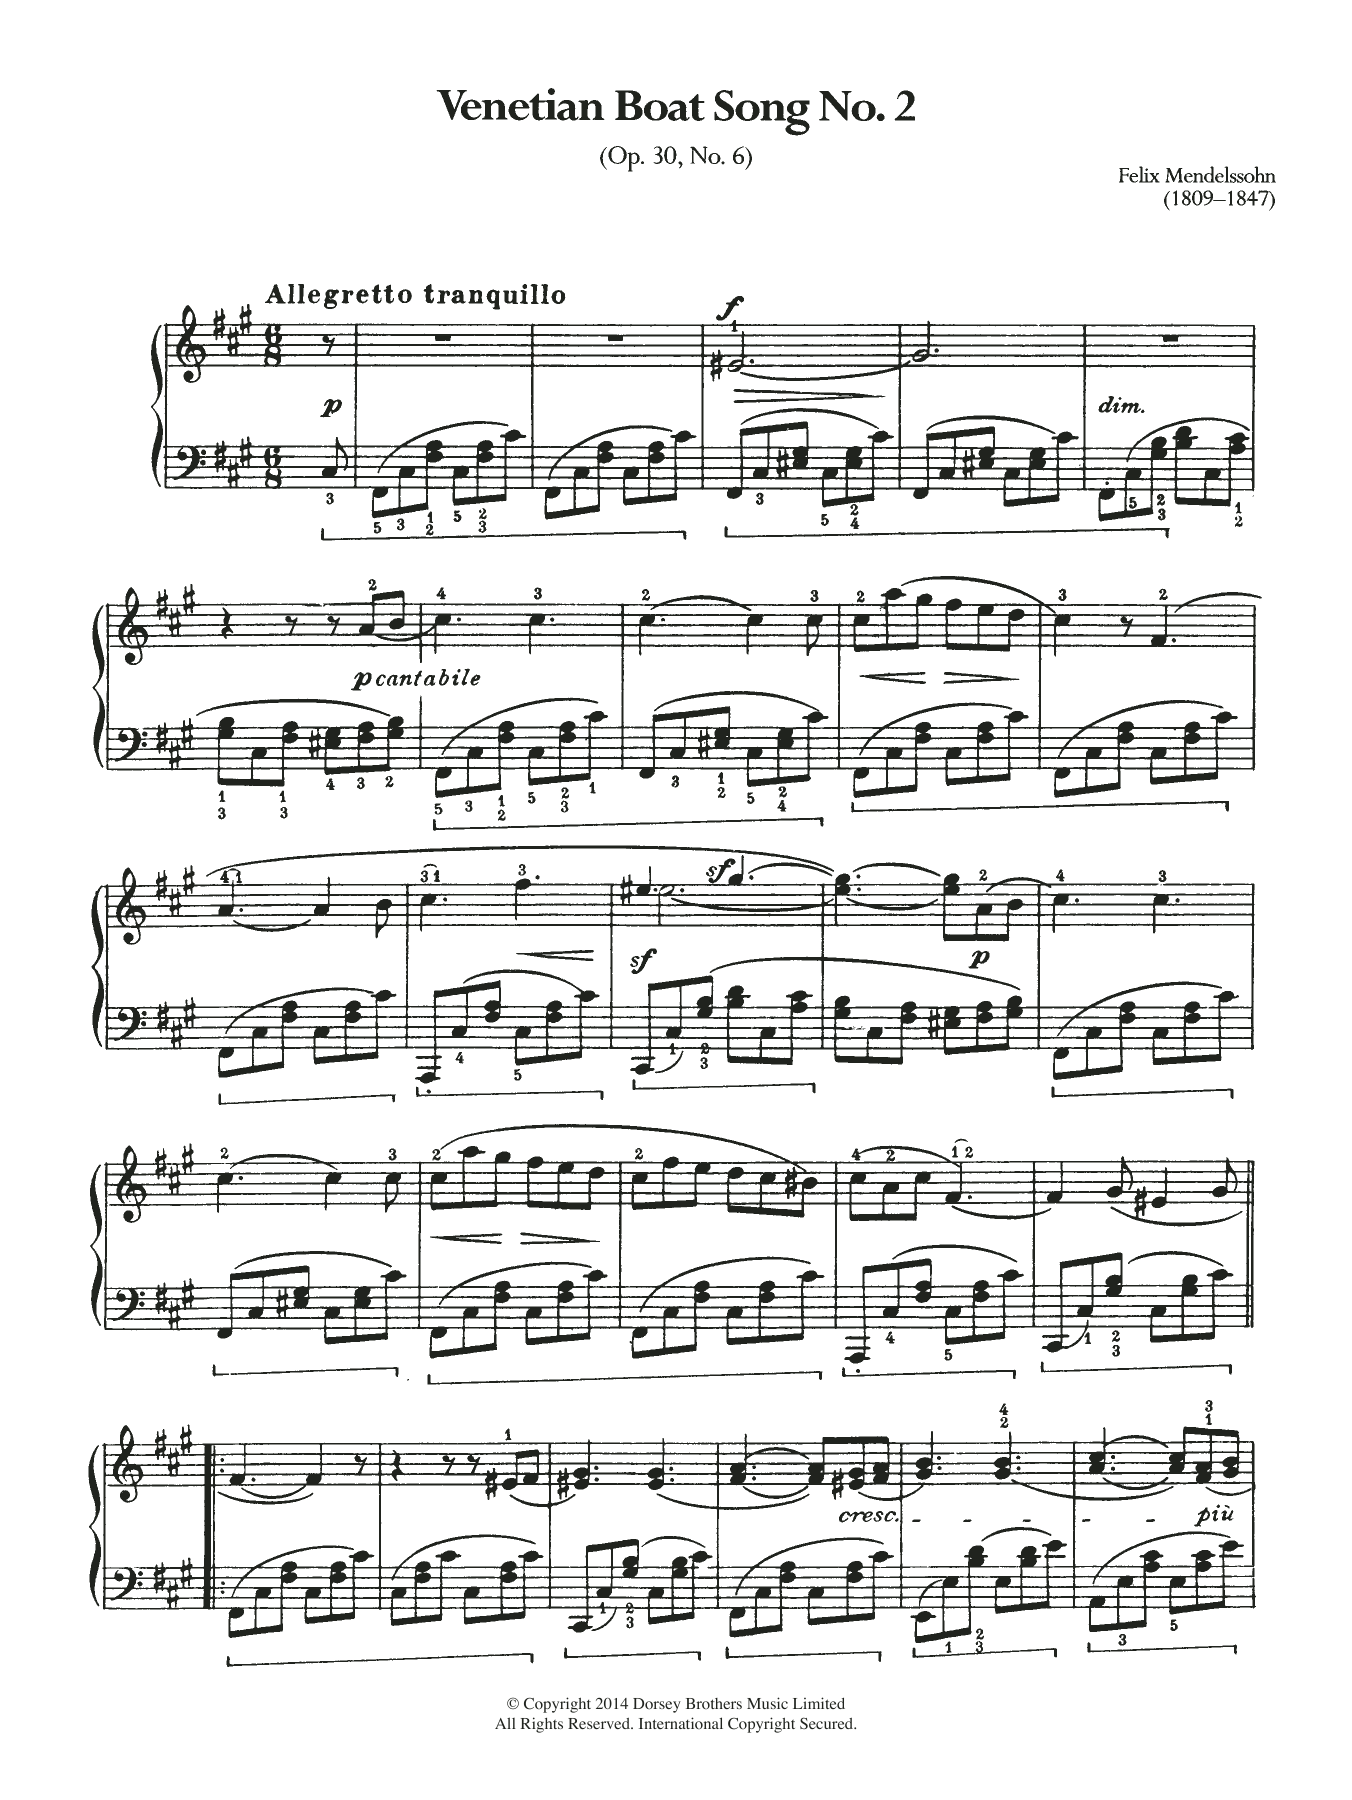 Felix Mendelssohn Venetian Boat Song No.2 Sheet Music Notes & Chords for Piano - Download or Print PDF